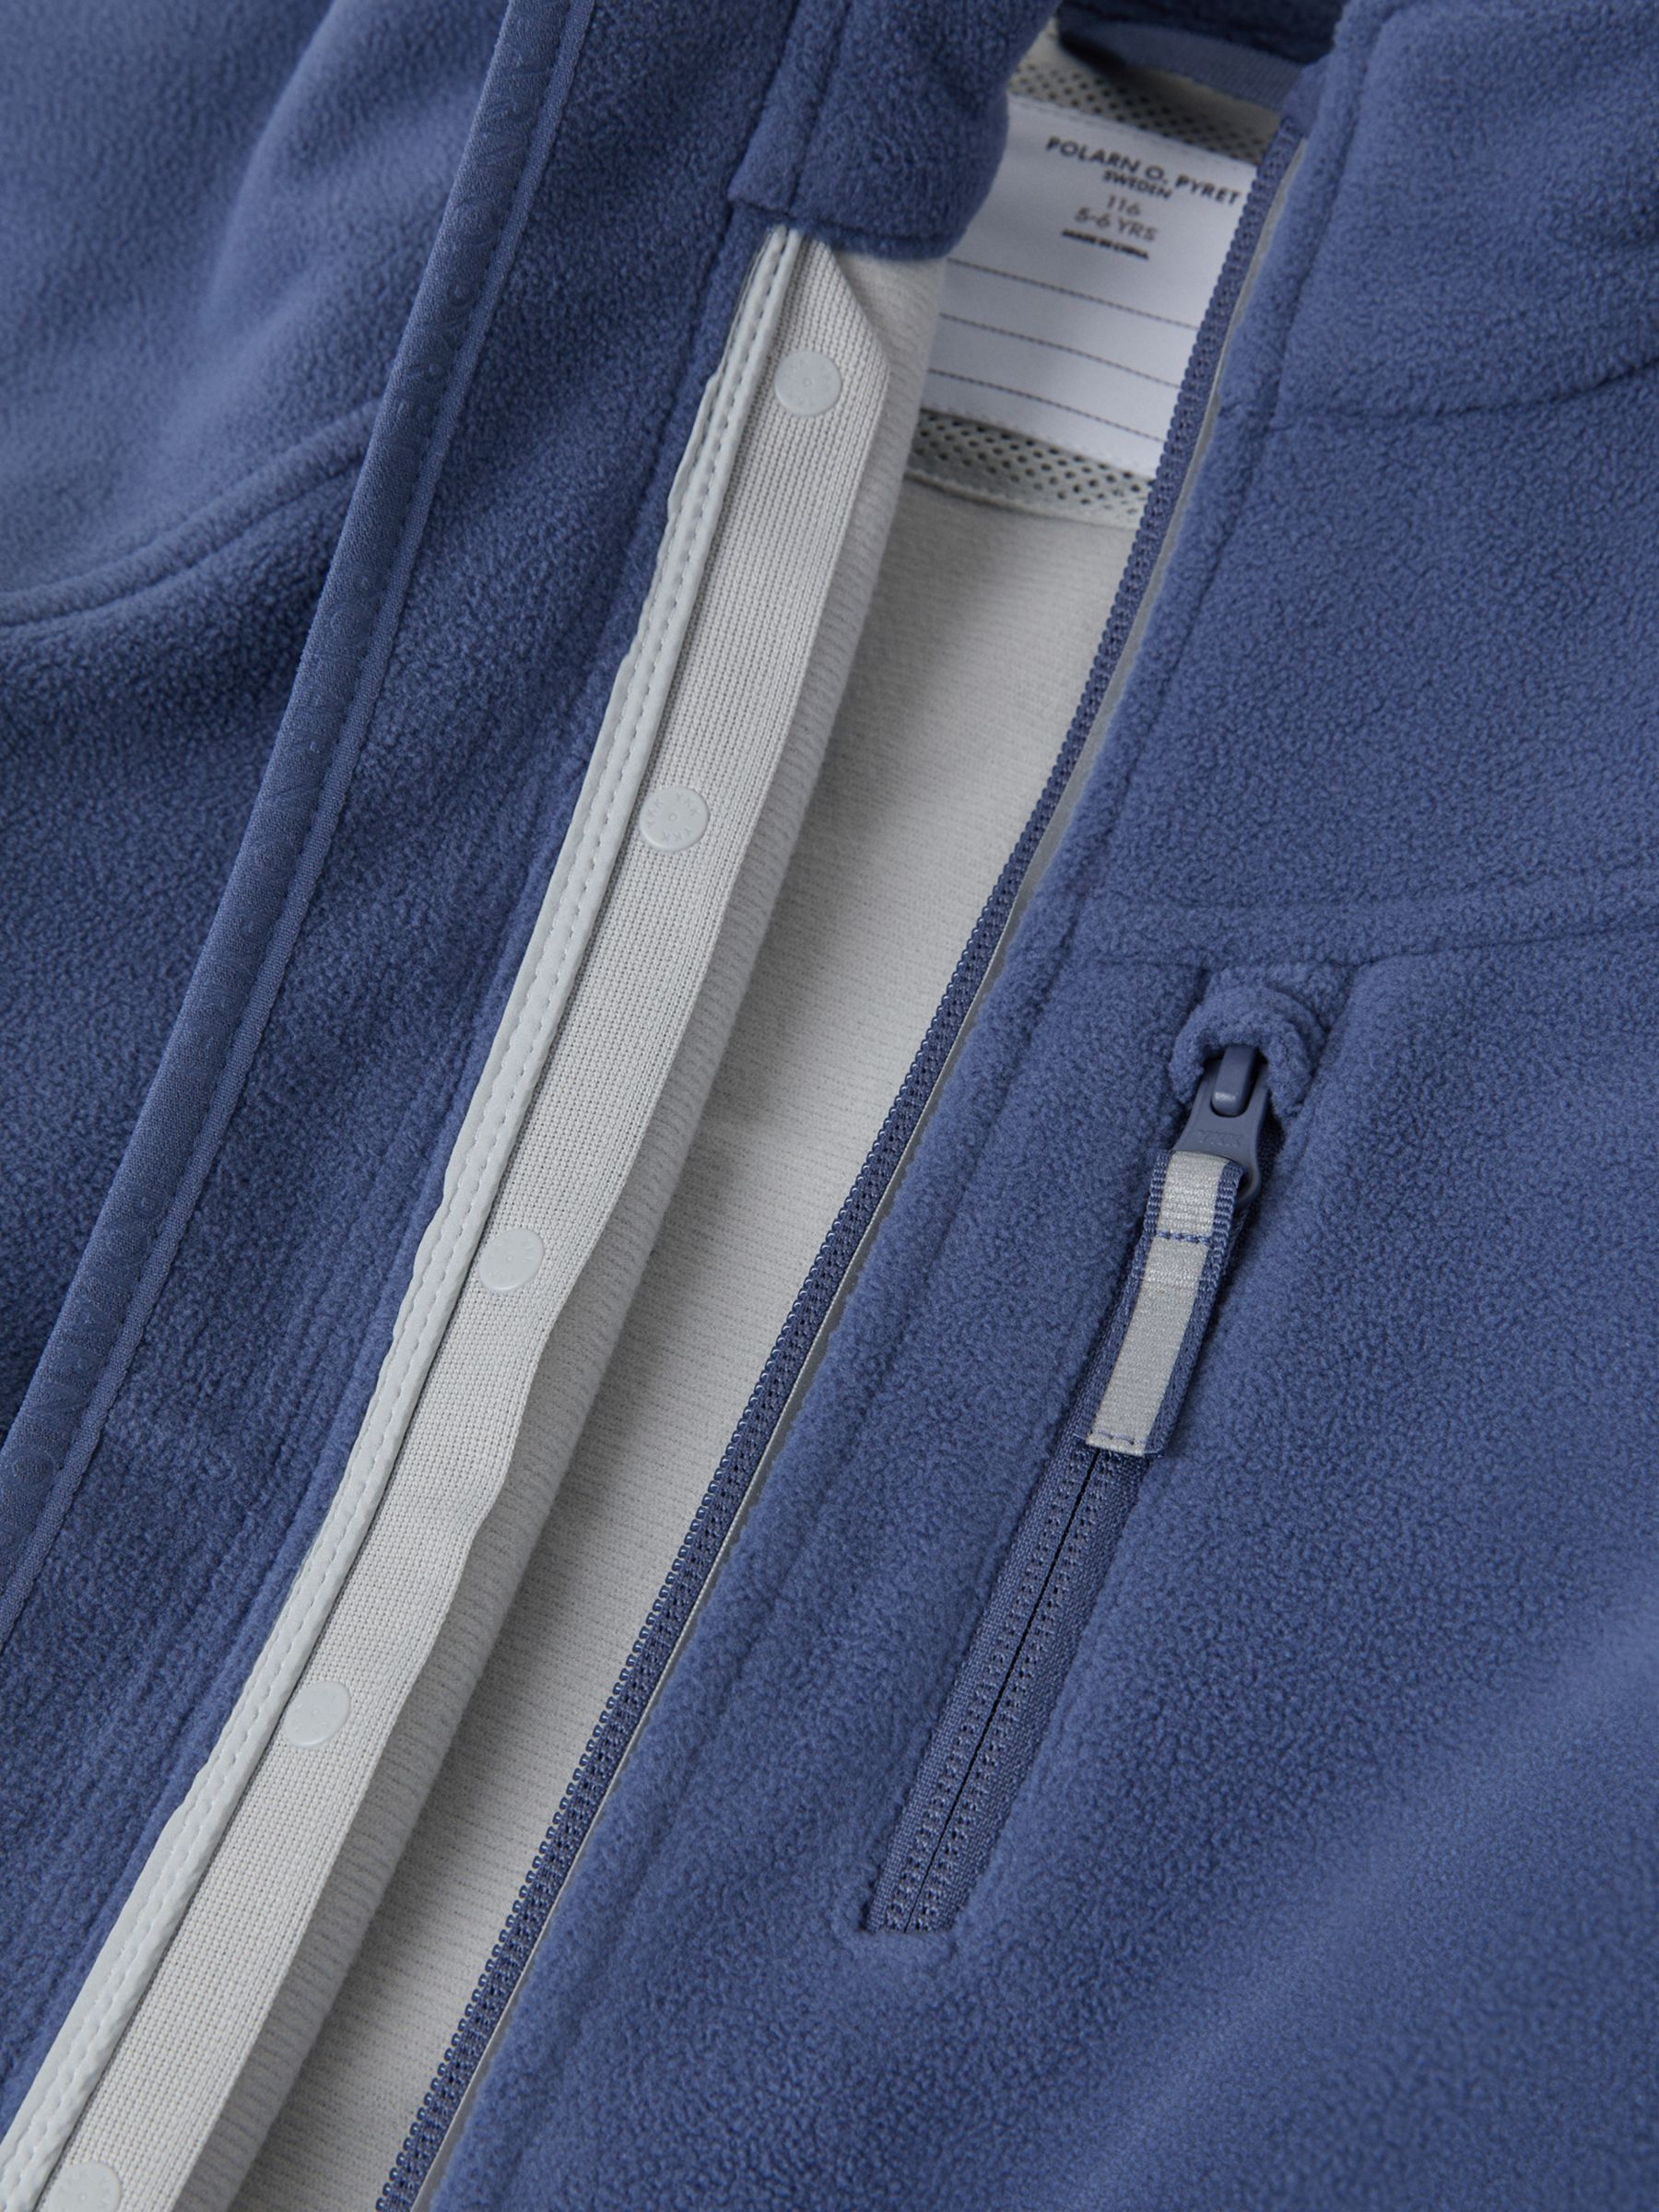 Polarn O. Pyret Kids' Fleece Jacket, Blue at John Lewis & Partners